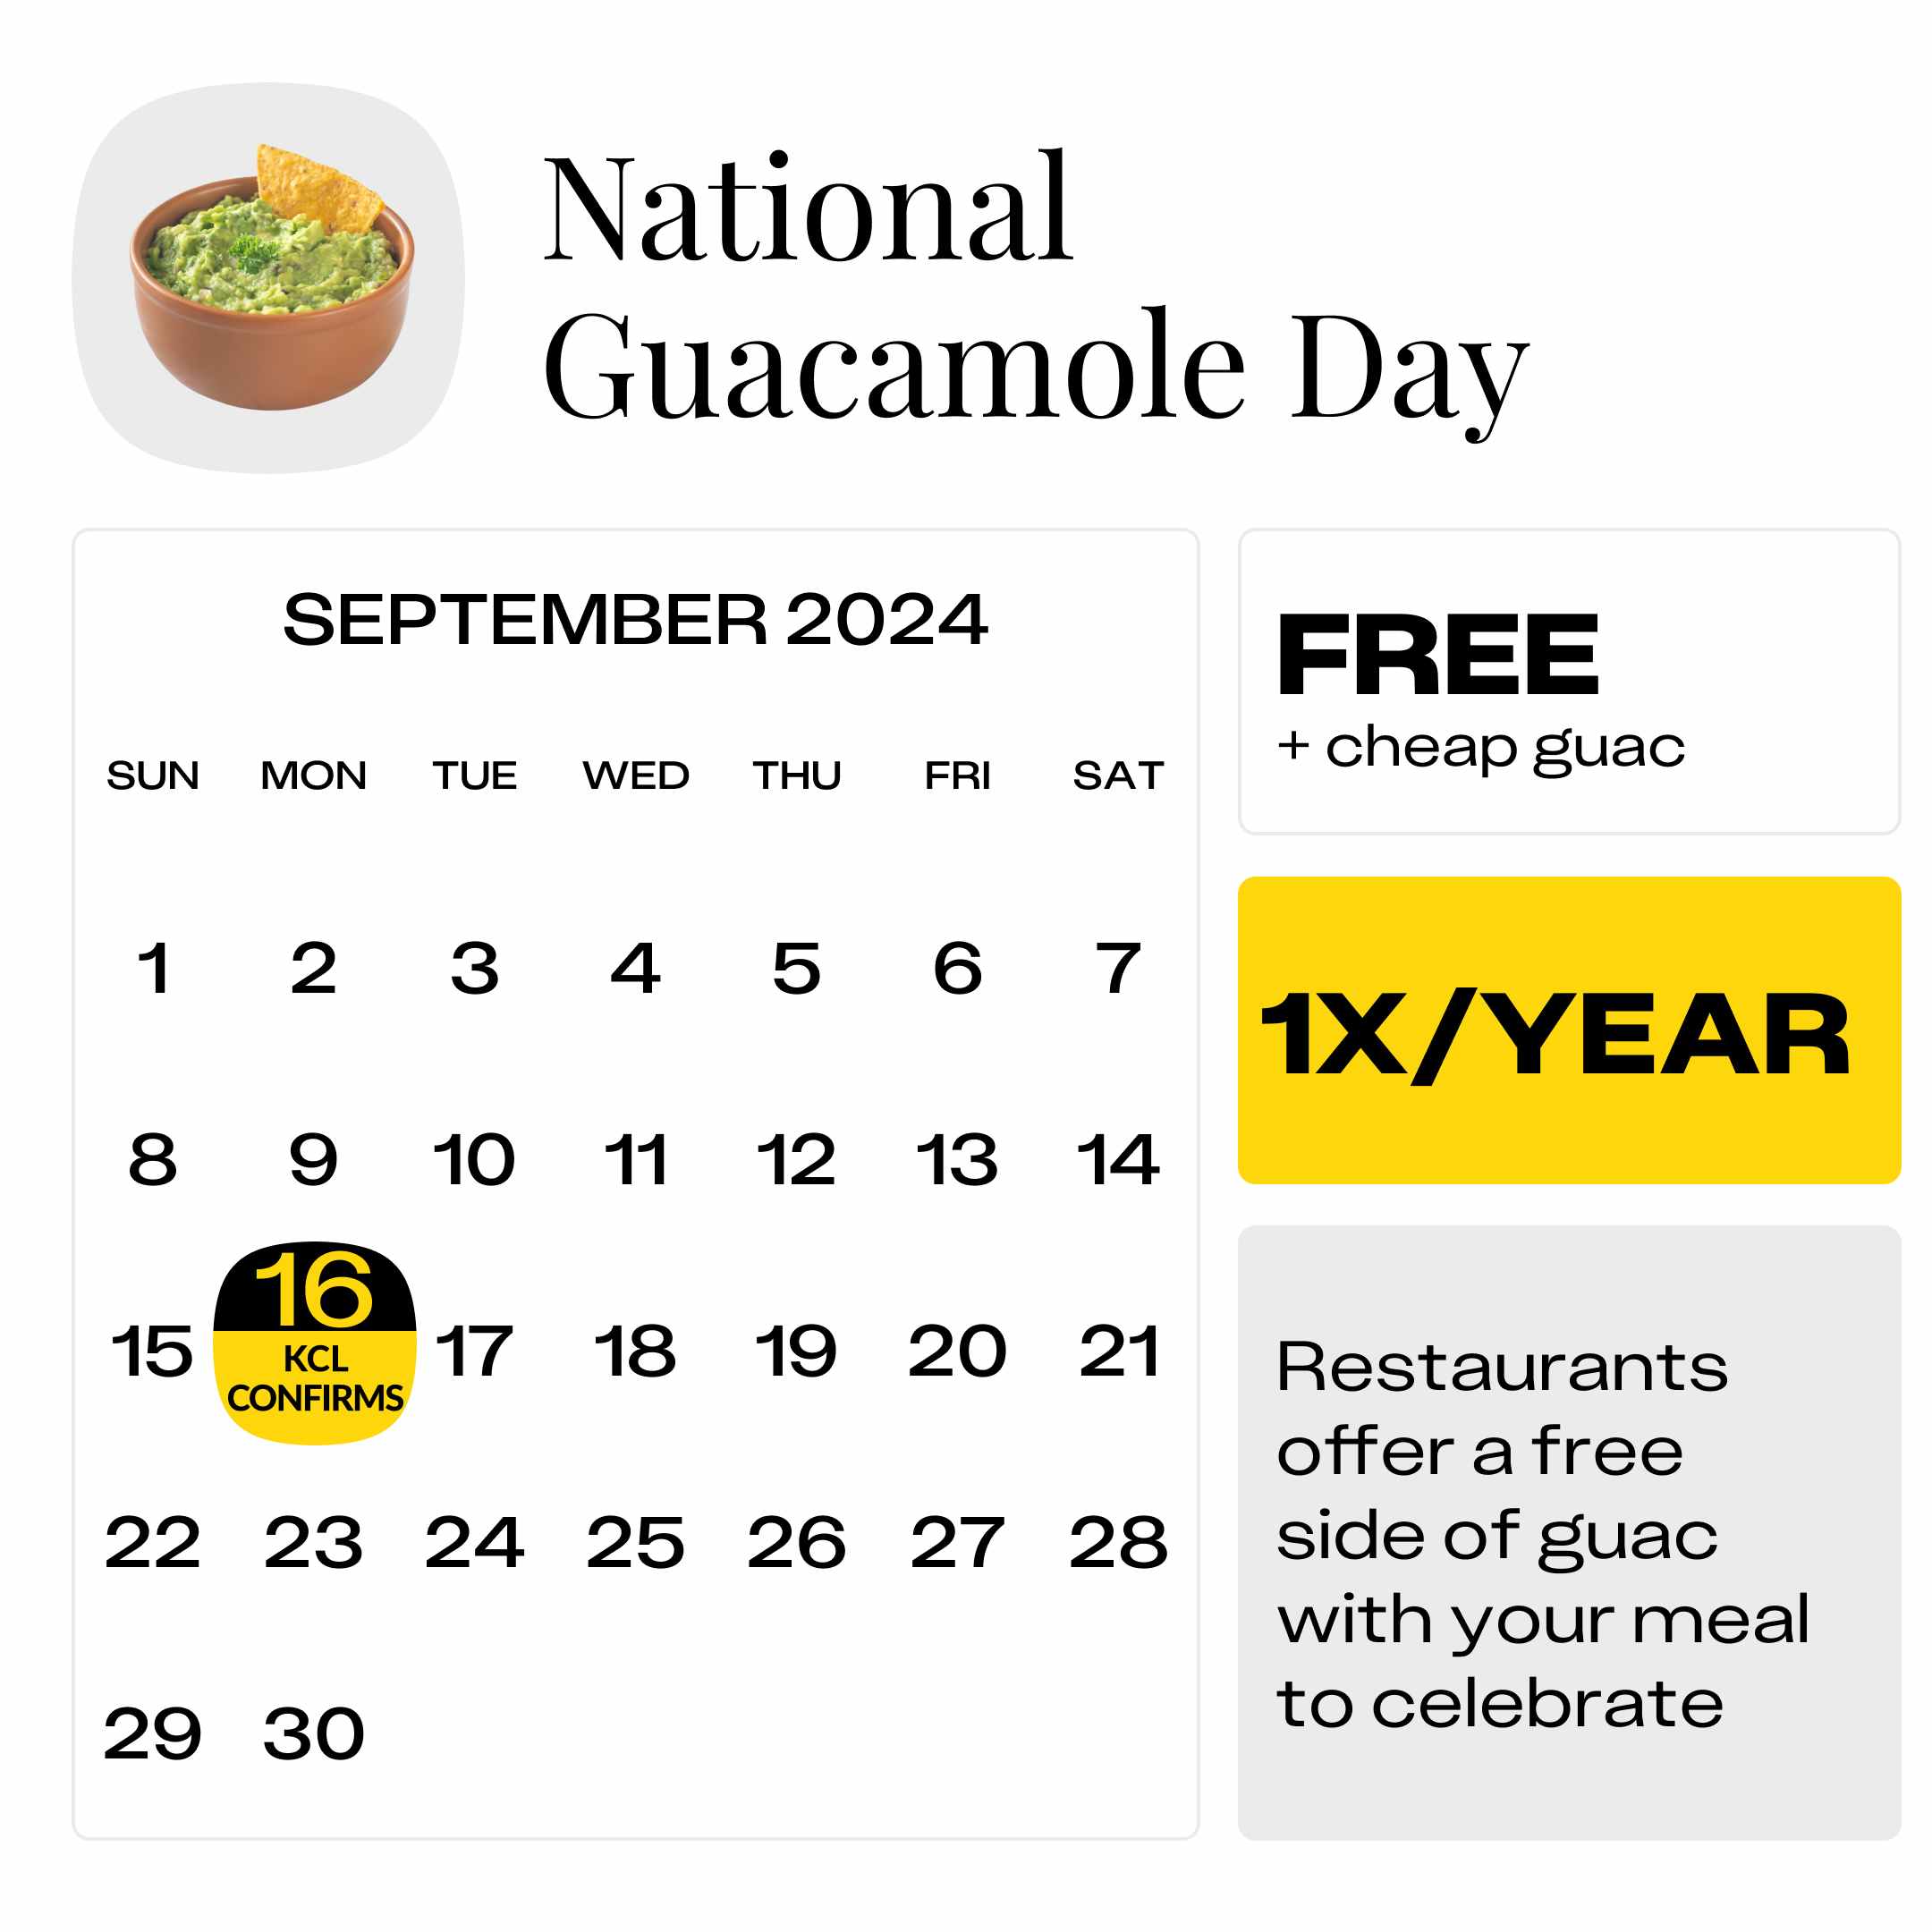 National-Guacamole-Day-2024-retail-event-calendar-kcl